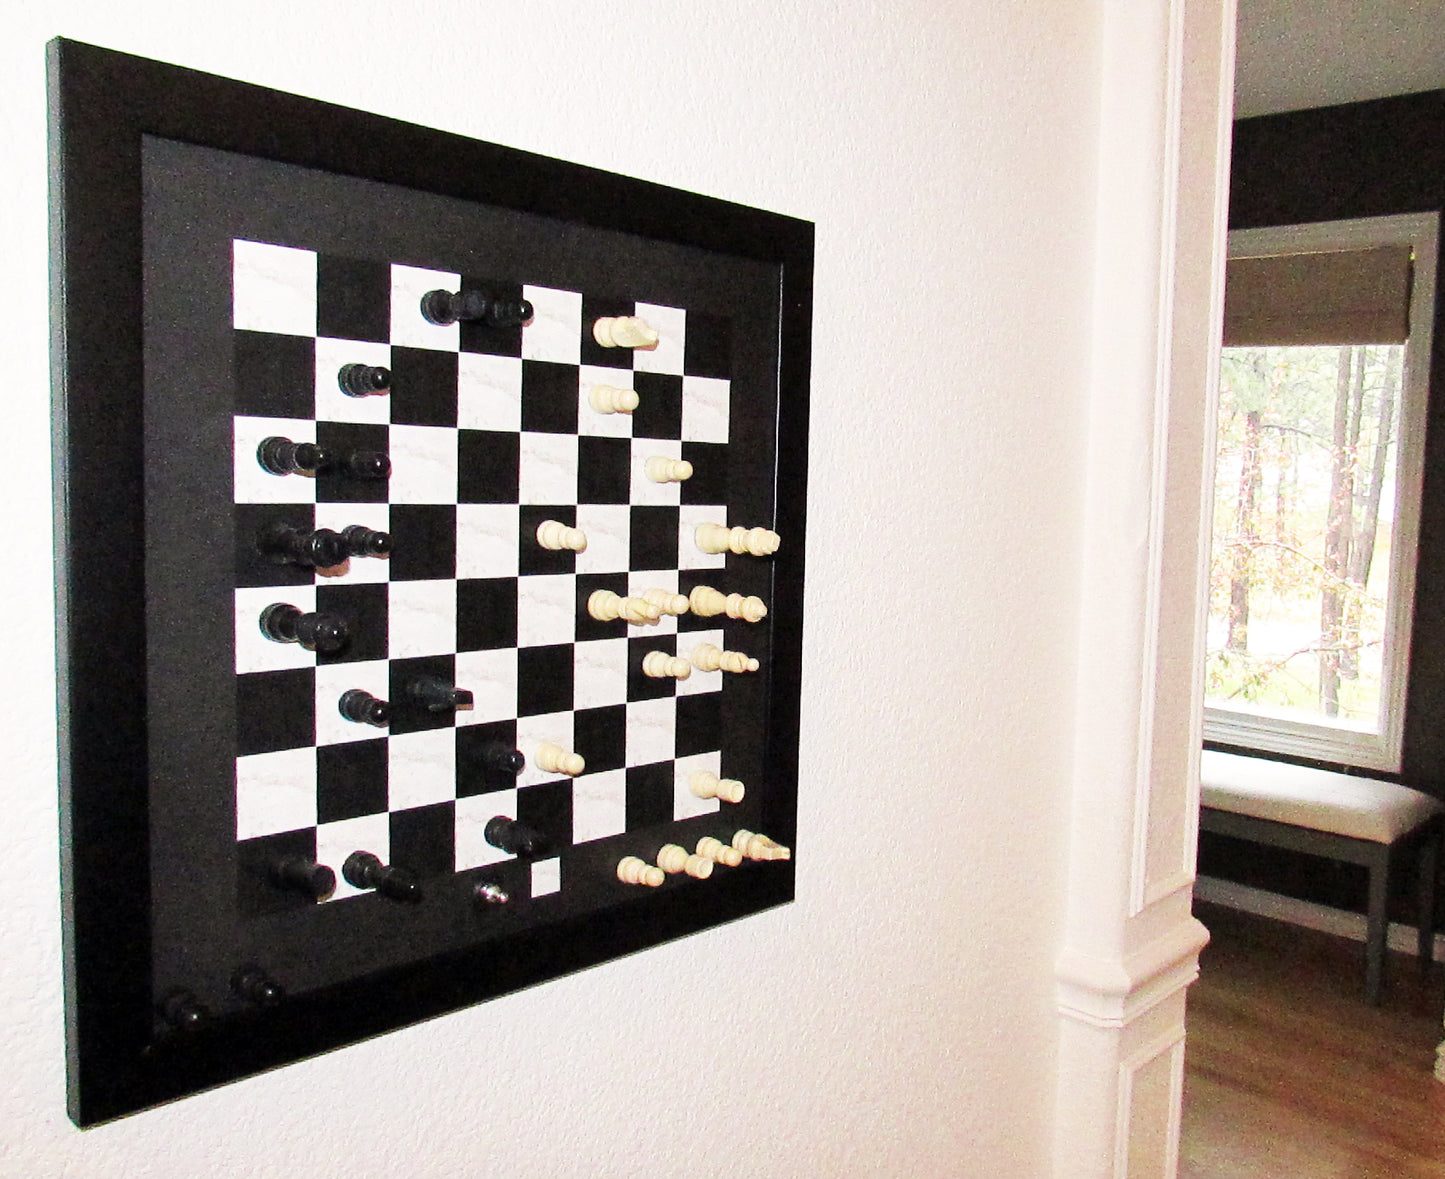 Wall Framed Chess Boards - Modern, Retro, Black & White, Beach - Chess Decor